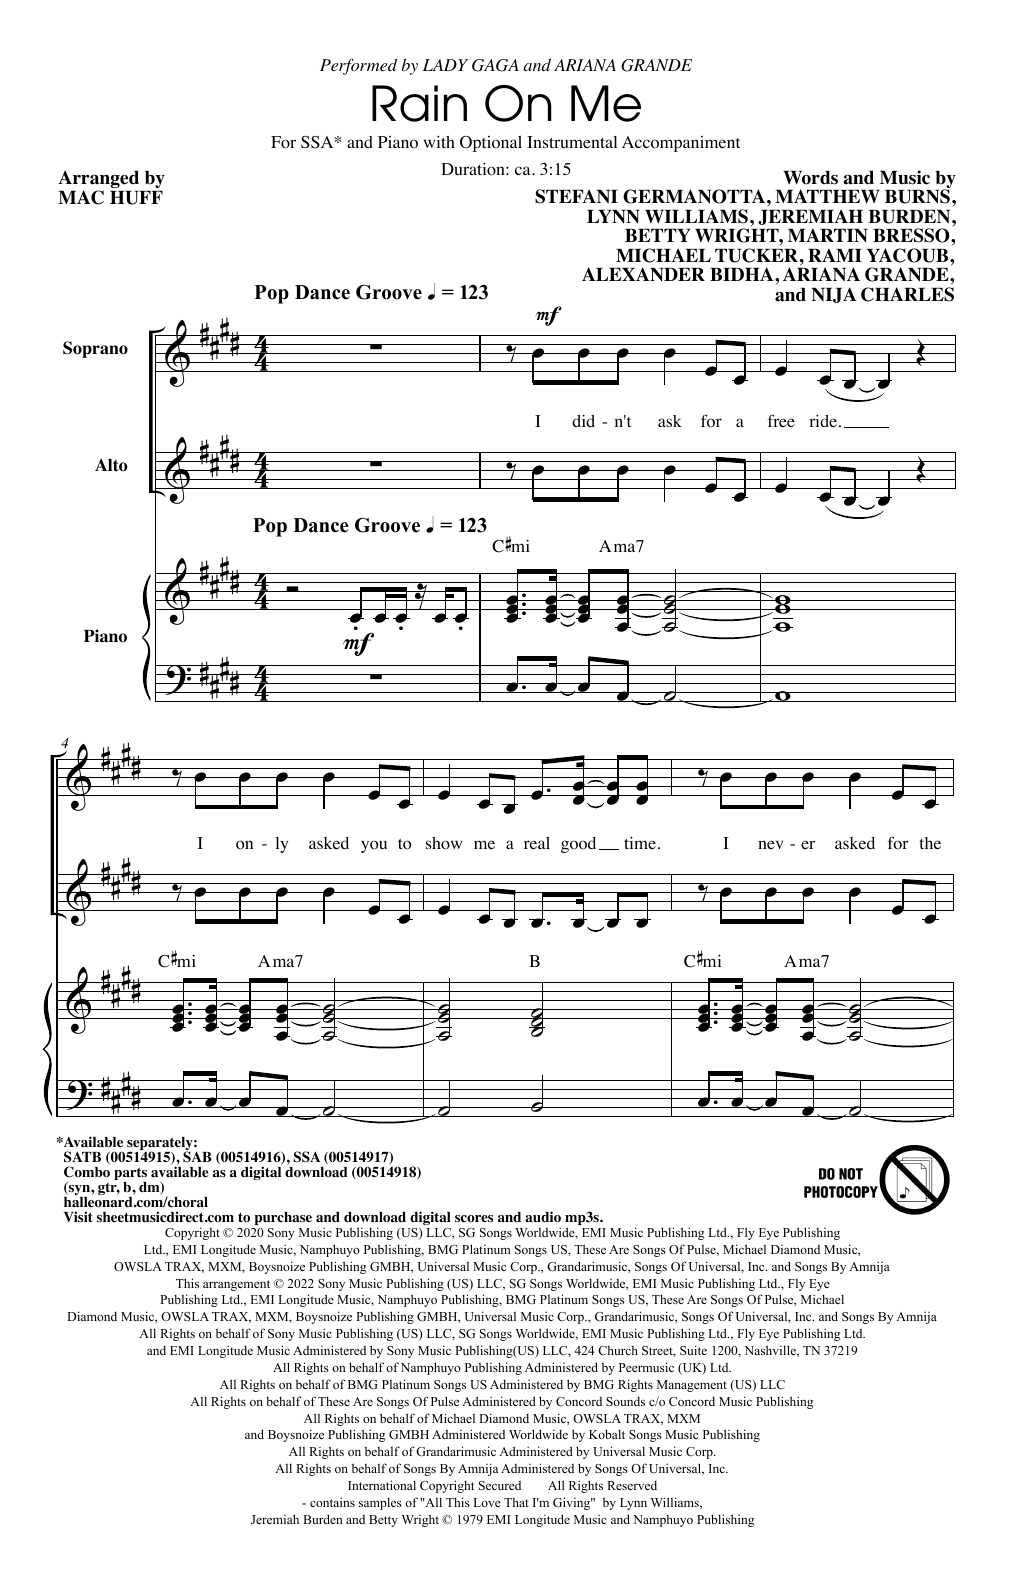 Download Lady Gaga & Ariana Grande Rain On Me (arr. Mac Huff) Sheet Music and learn how to play SAB Choir PDF digital score in minutes